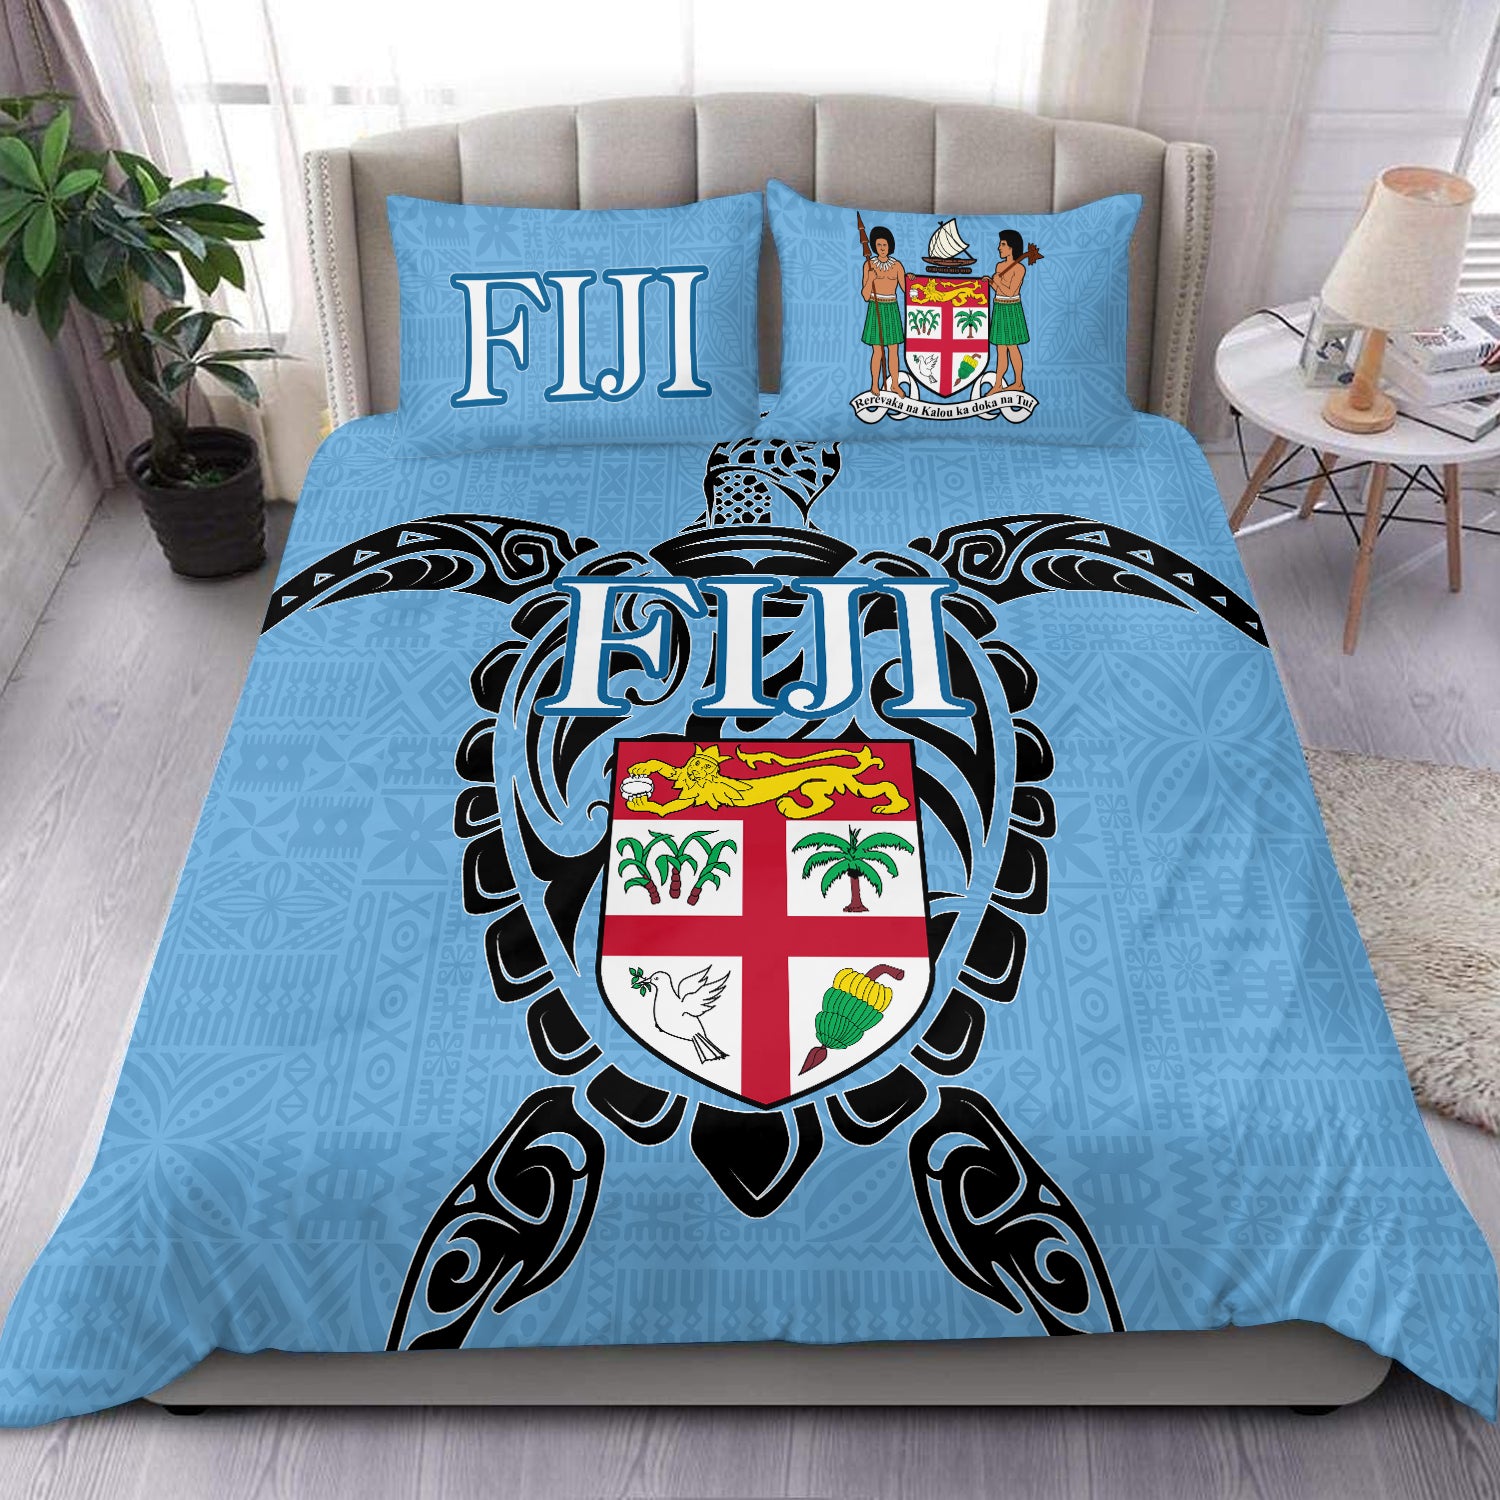 Fiji Bedding Sets - Fijian patterns ver3 Blue - LT20 Blue - Polynesian Pride